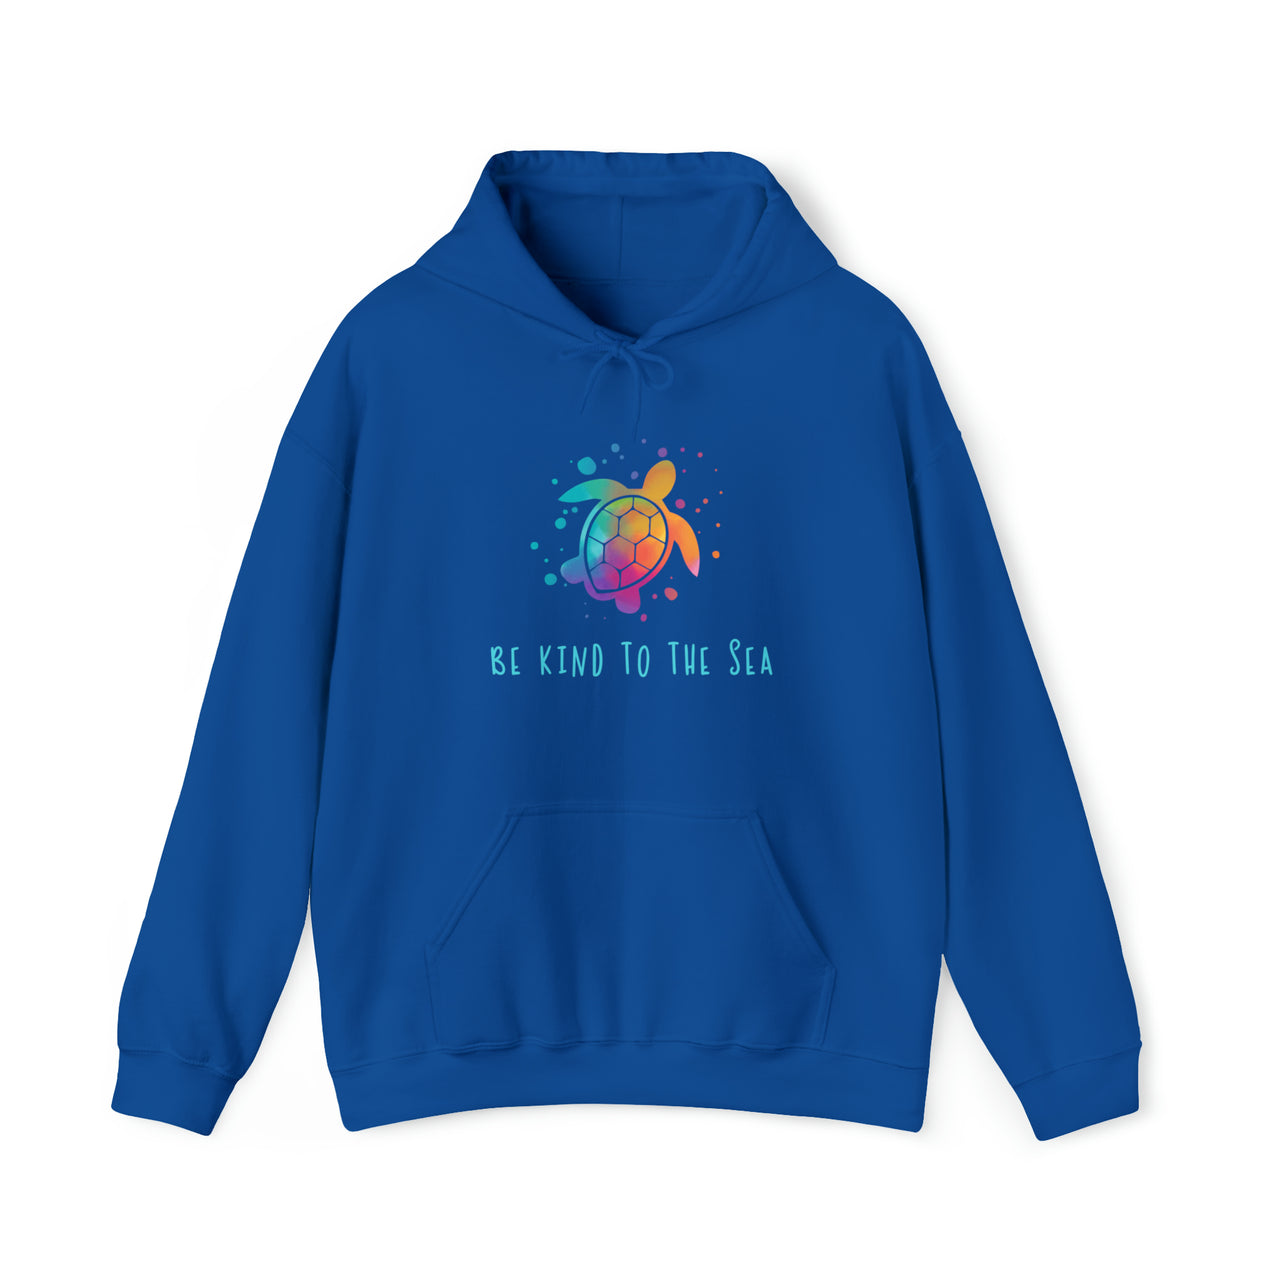 Be Kind to the Sea Hooded Sweatshirt, Unisex, Royal